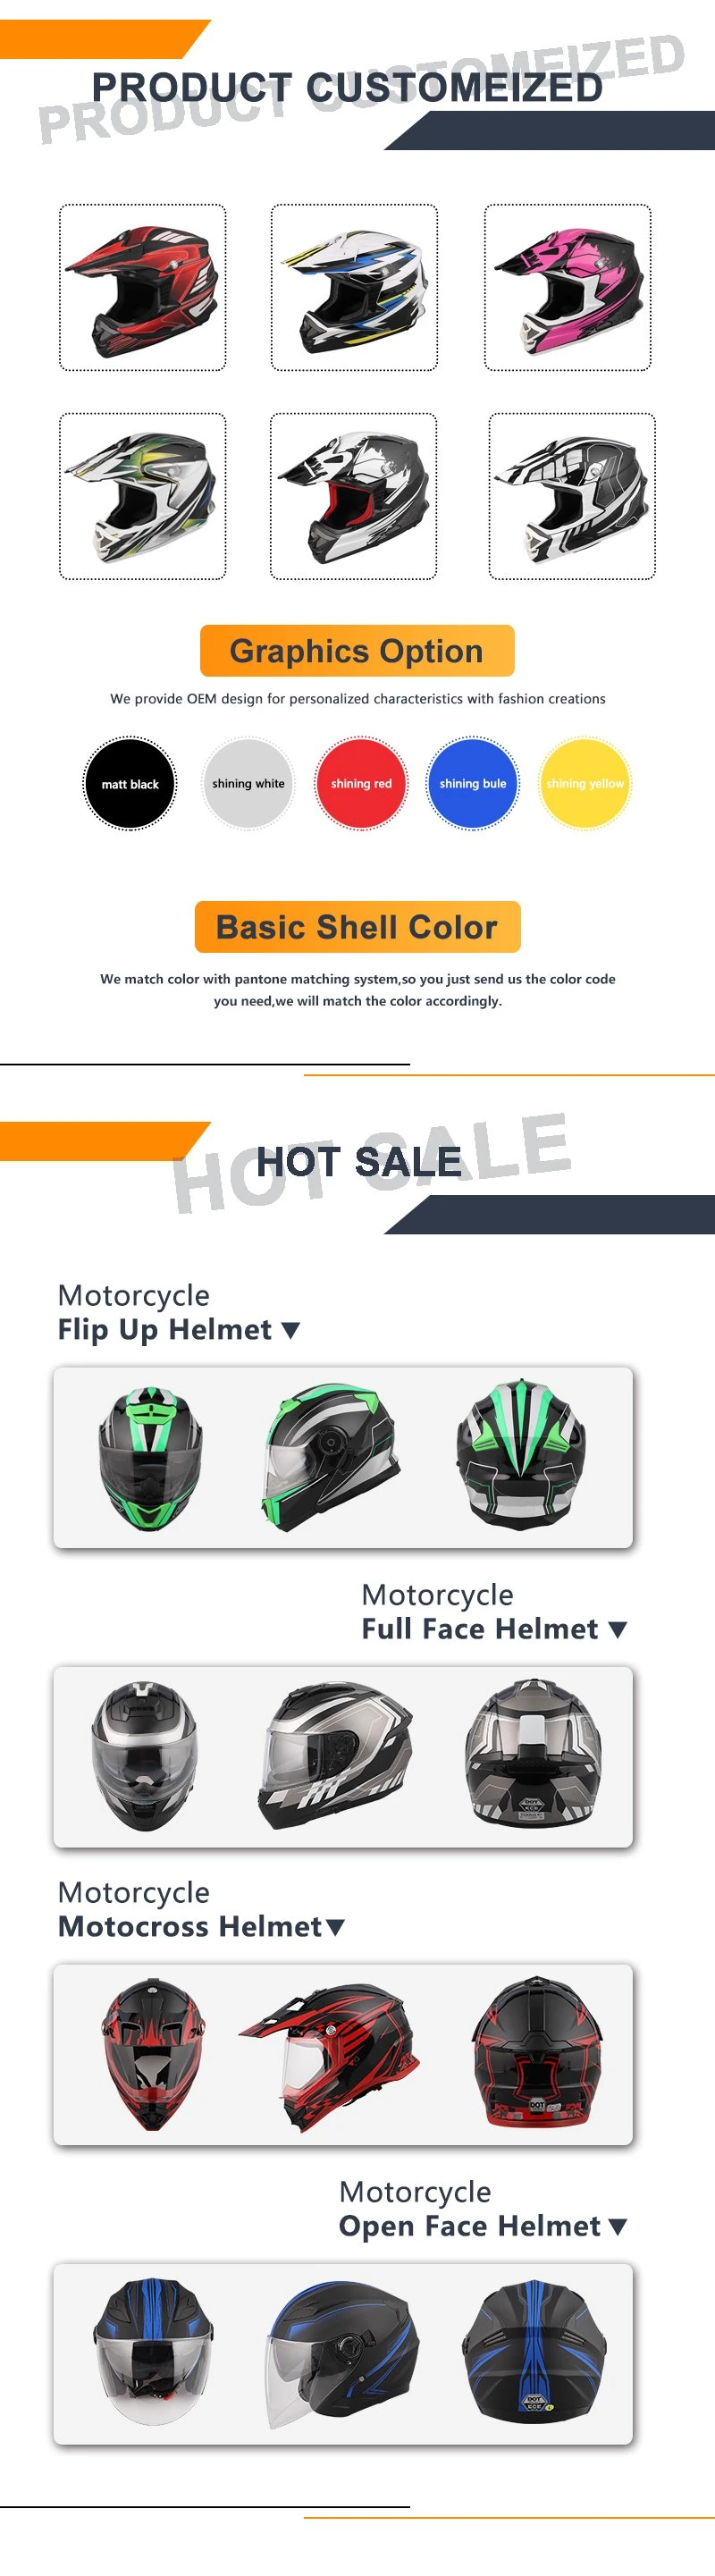 off Road Motorcycle Mx Helmet Fashion Design Full Face Protect Motocross Helmets